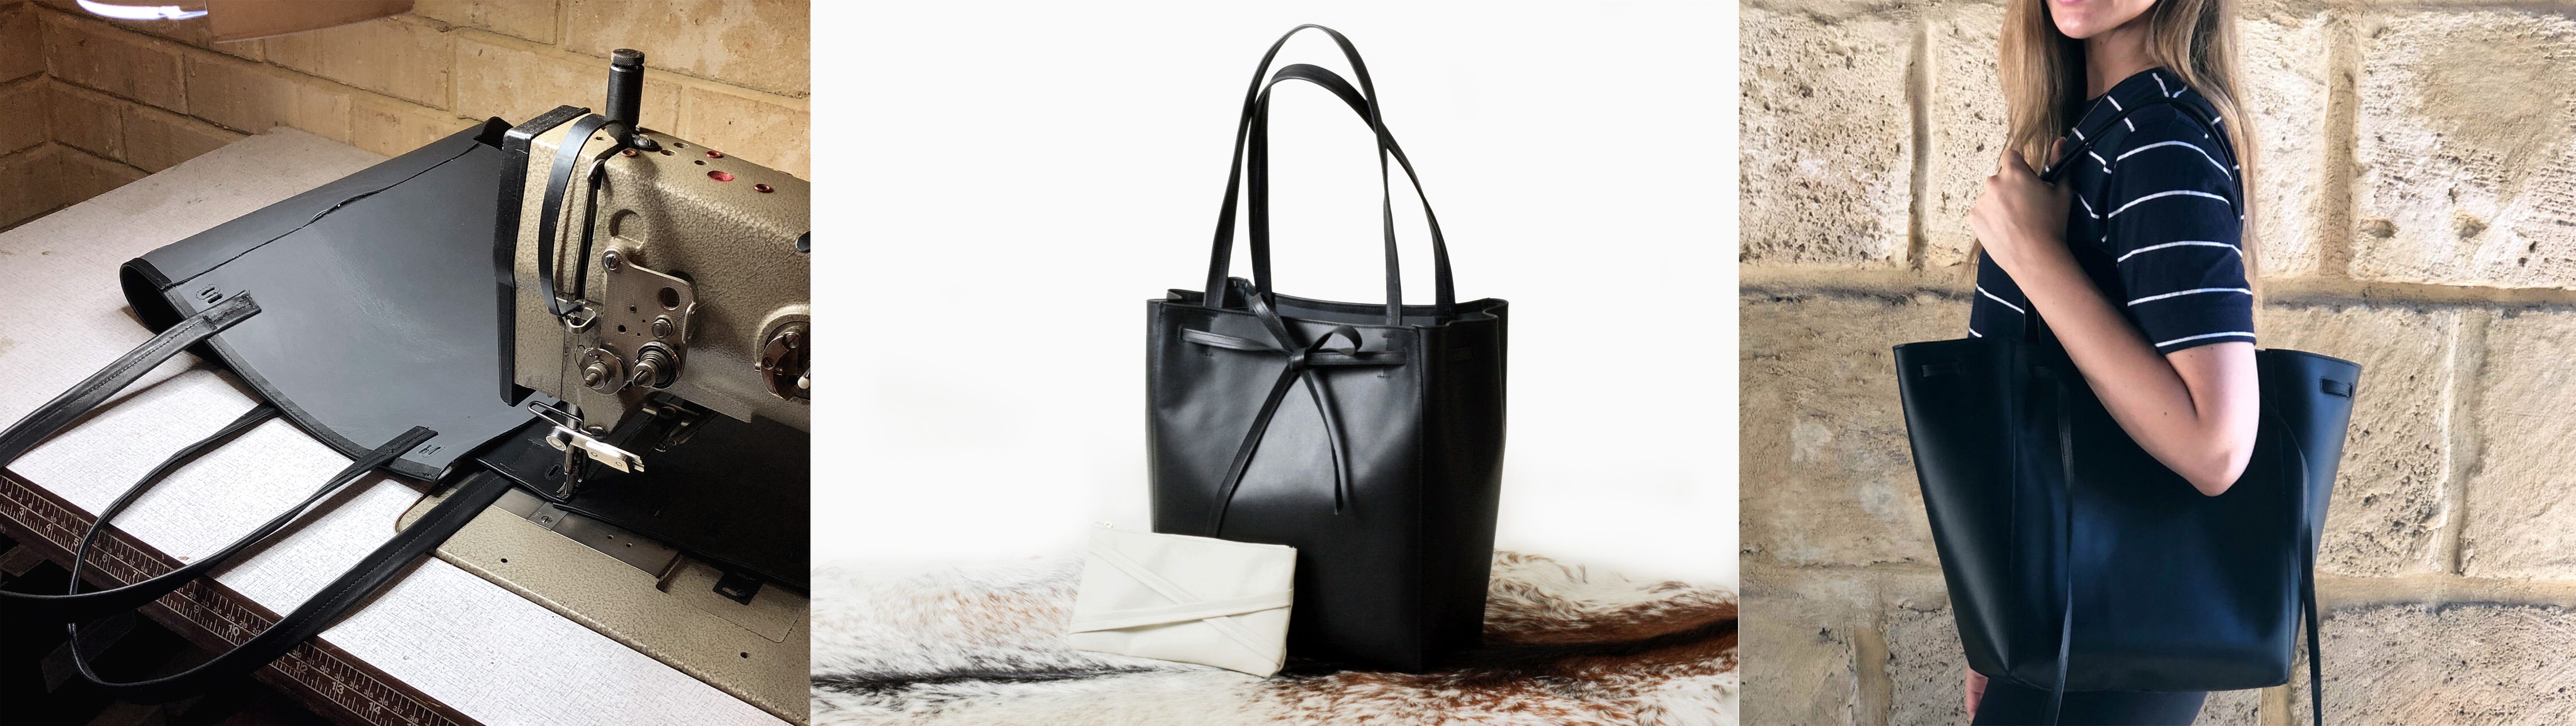 Kurgool Women Purses and Handbags Top Handle Satchel Shoulder Bags Messenger Tote Bag for Ladies, Black